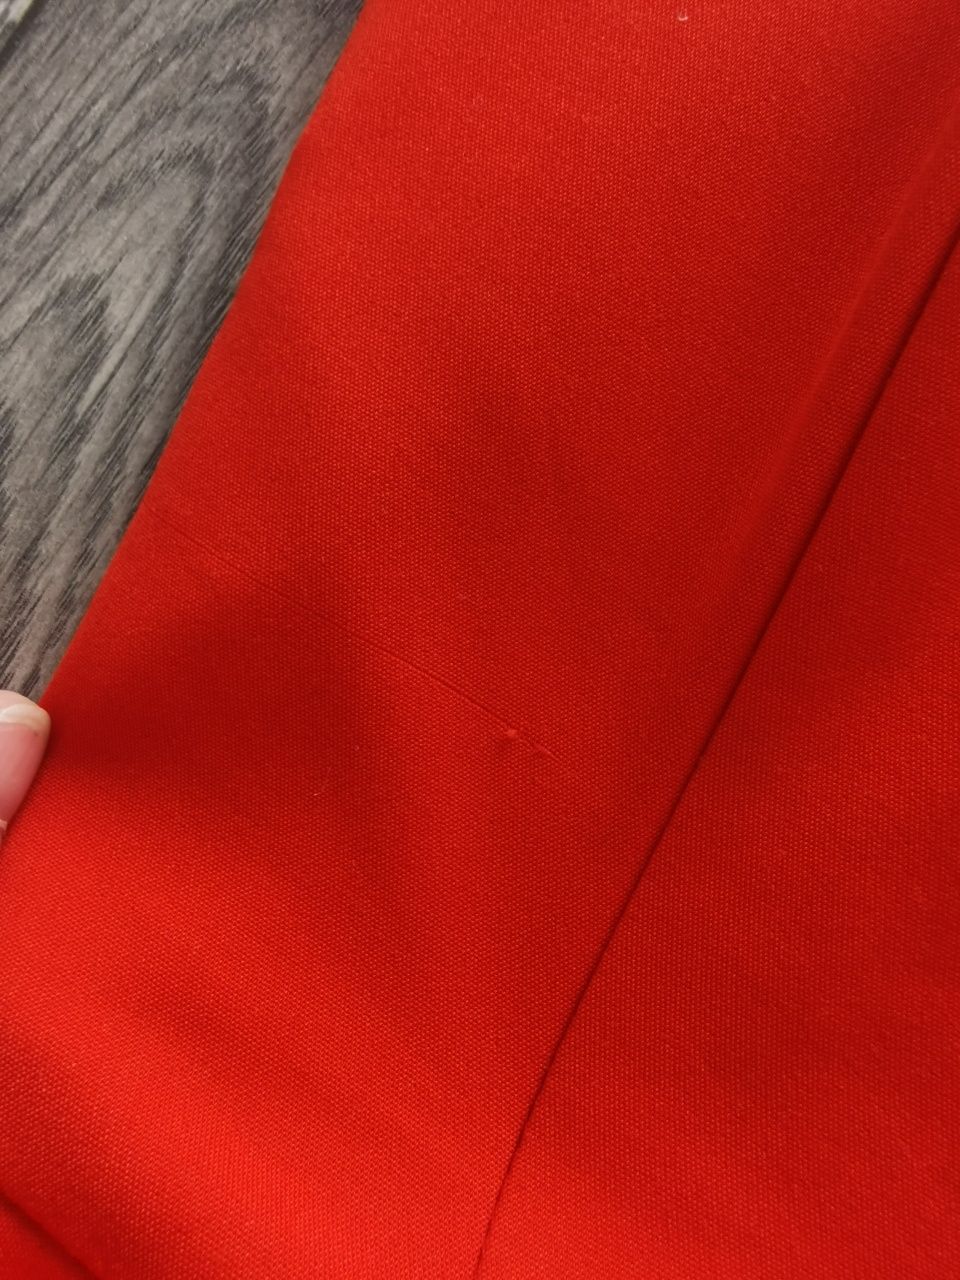 Czerwona gorsetowa rozkloszowana sukienka